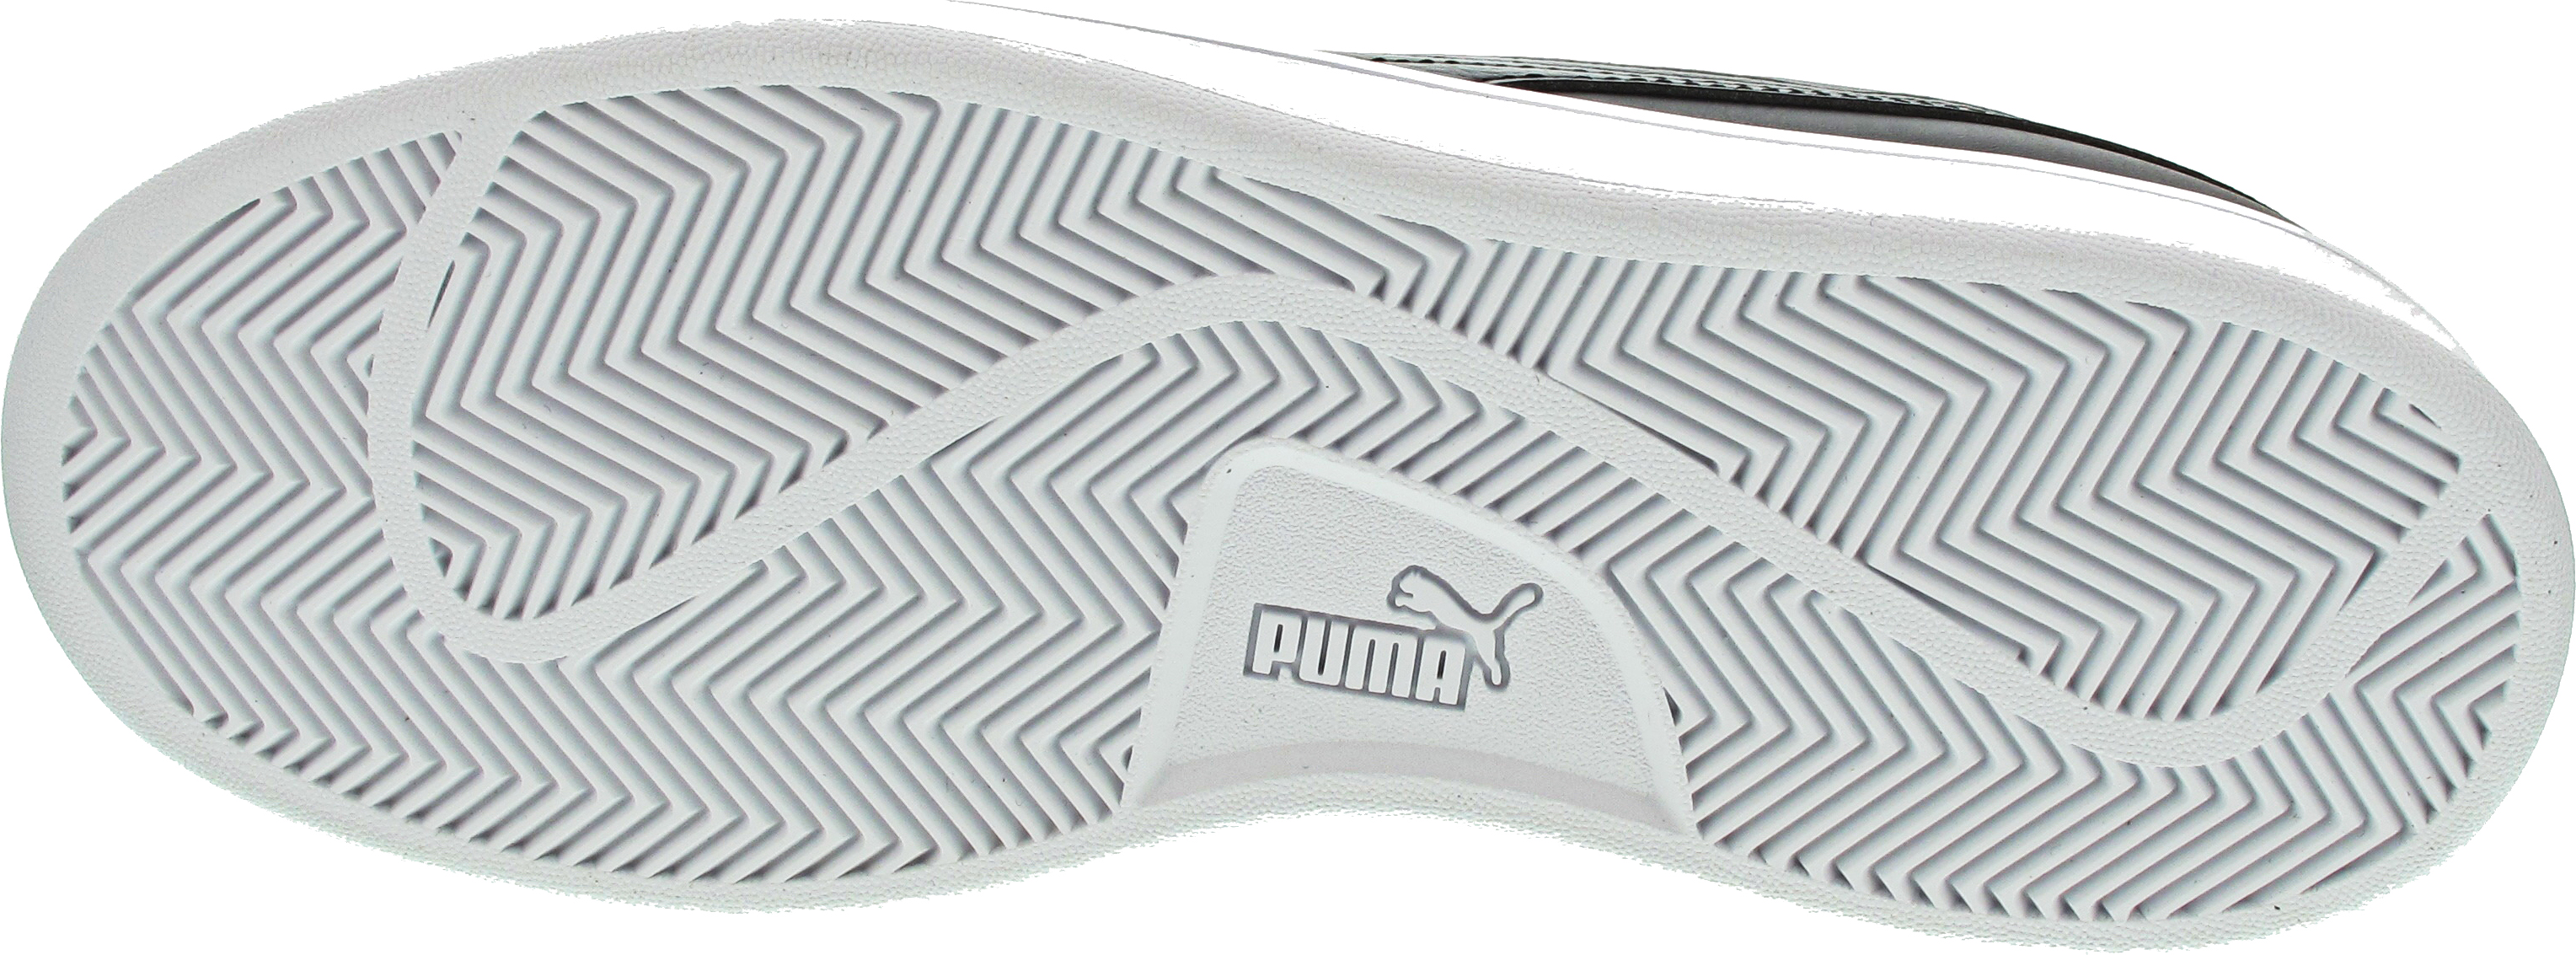 Puma Smash 3.0 L